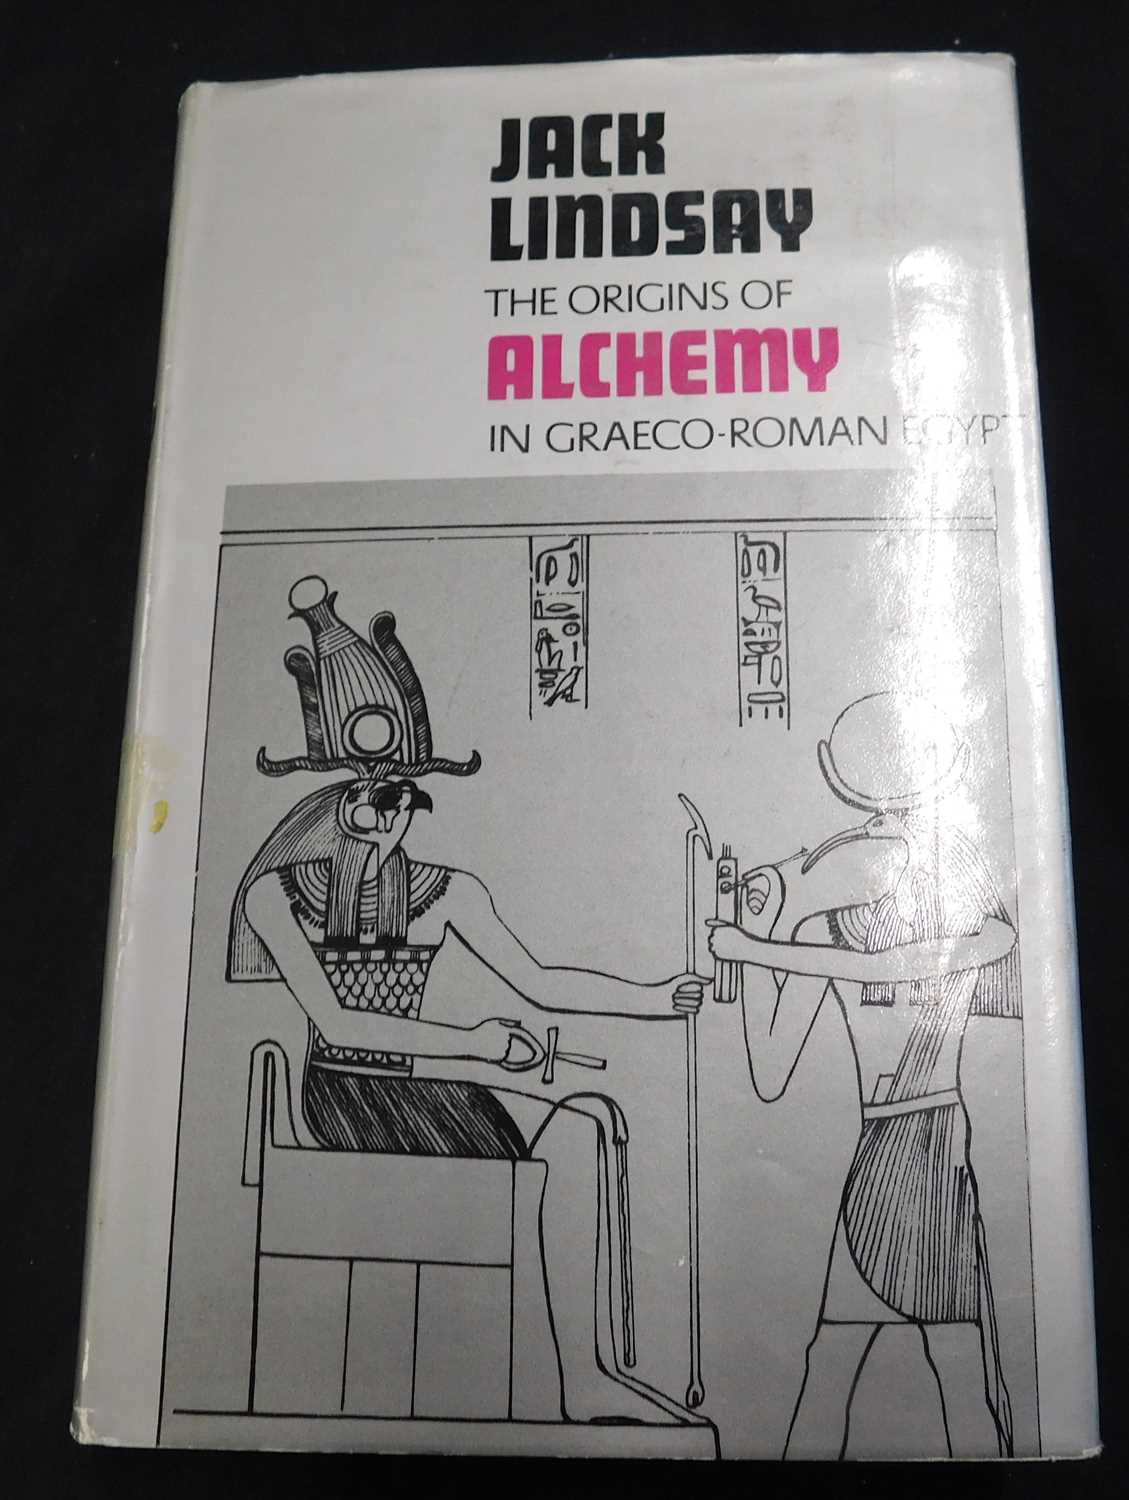 JACK LINDSAY: THE ORIGINS OF ALCHEMY OF GRAECO-ROMAN EGYPT, London, Frederick Muller, 1970, 1st